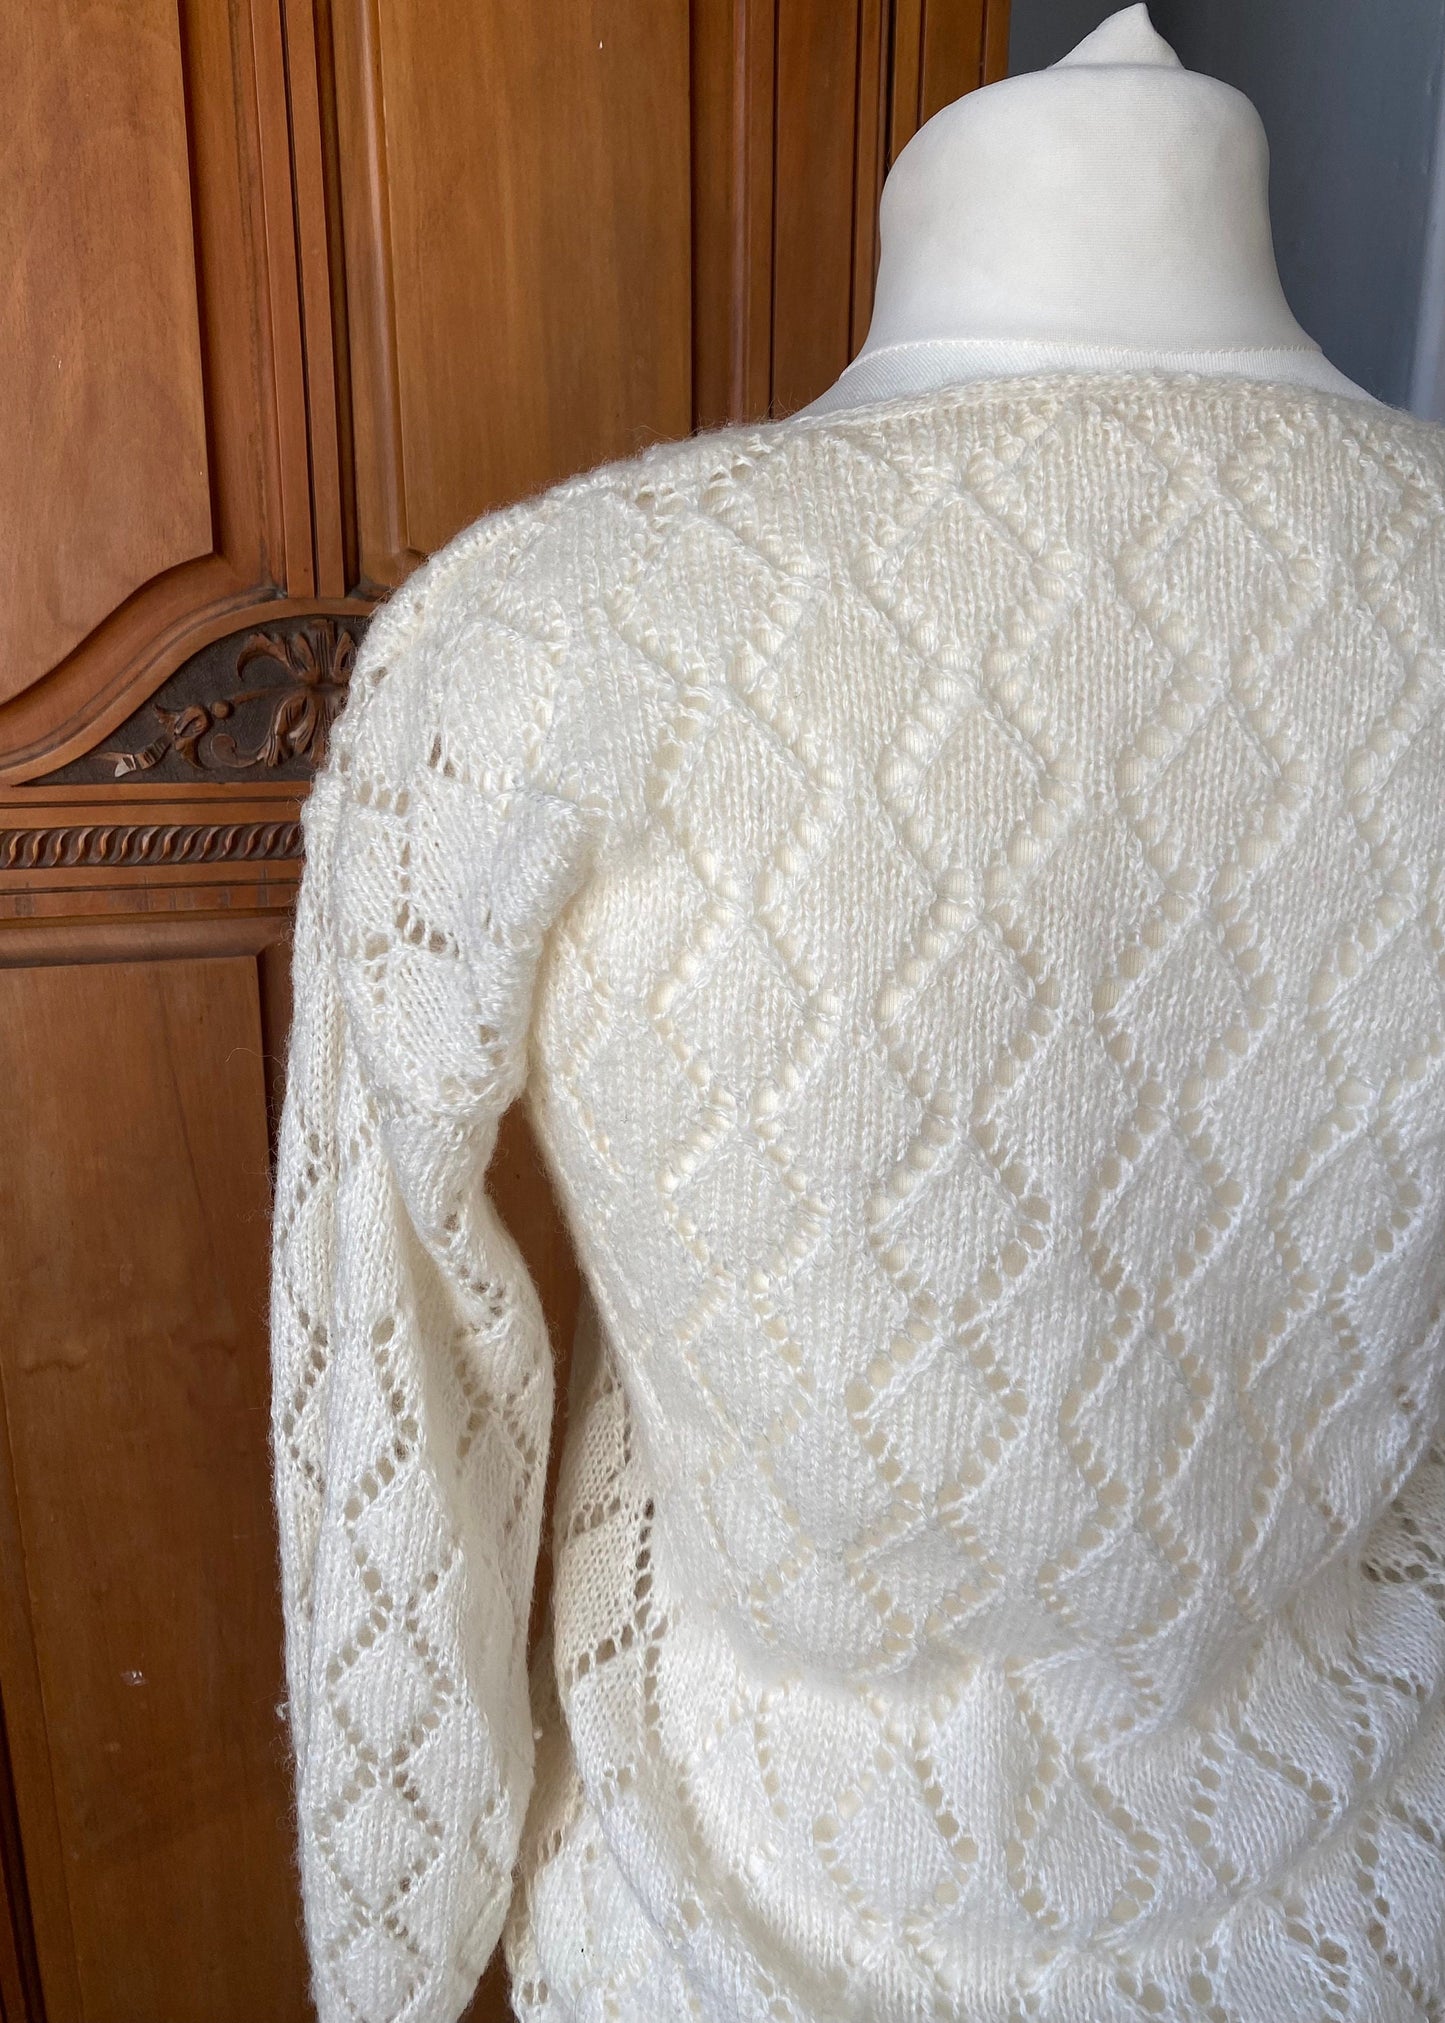 Vintage cream/ white jumper in an open knit diamond design . Approx U.K. size 10-12. Cute gift idea